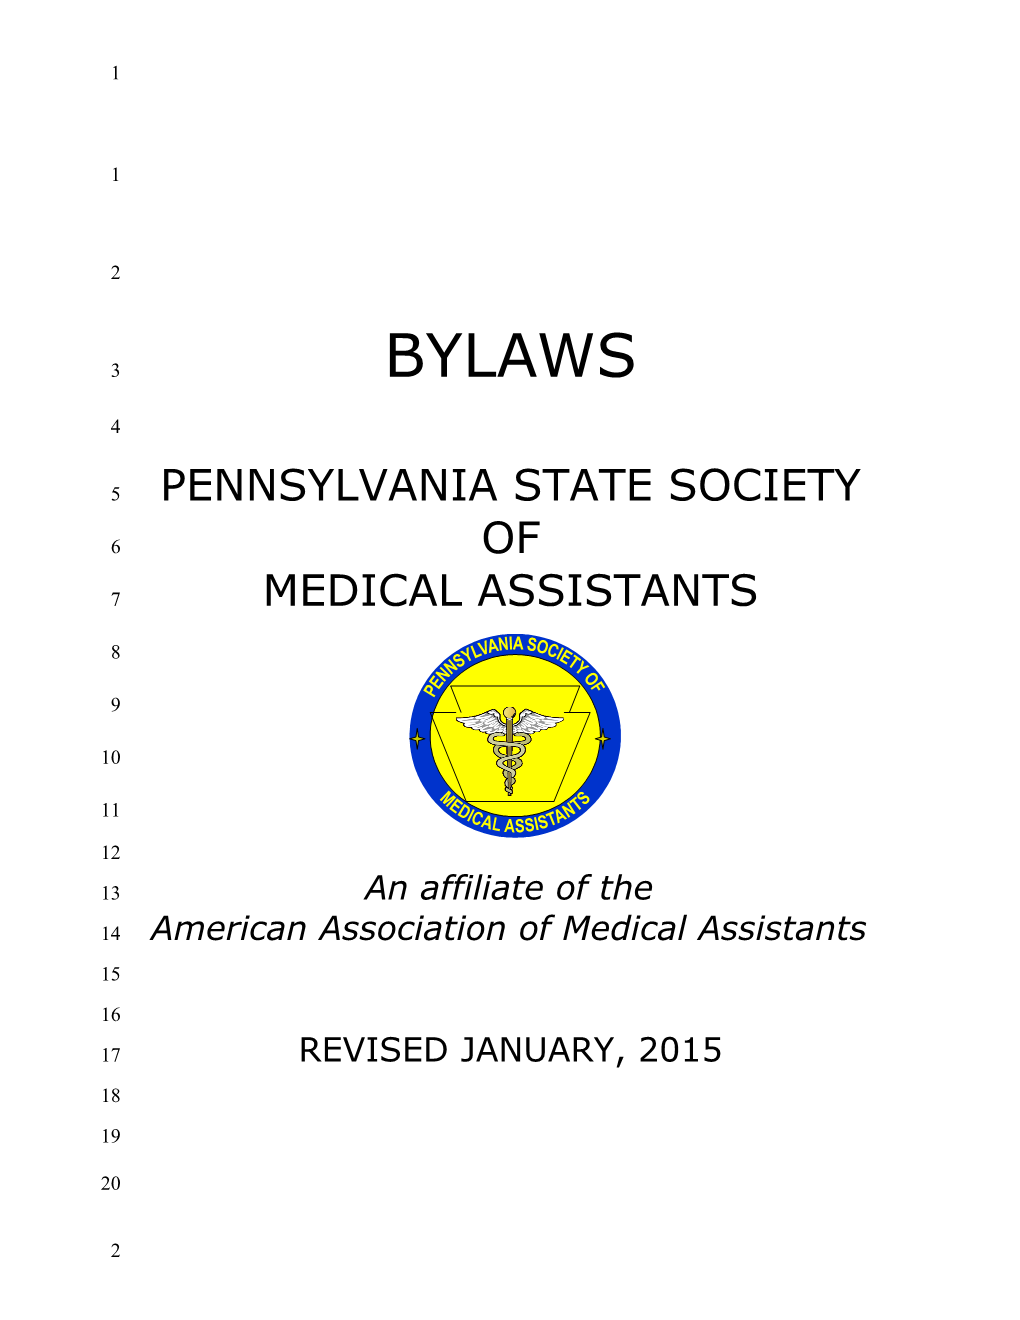 Pennsylvania State Society